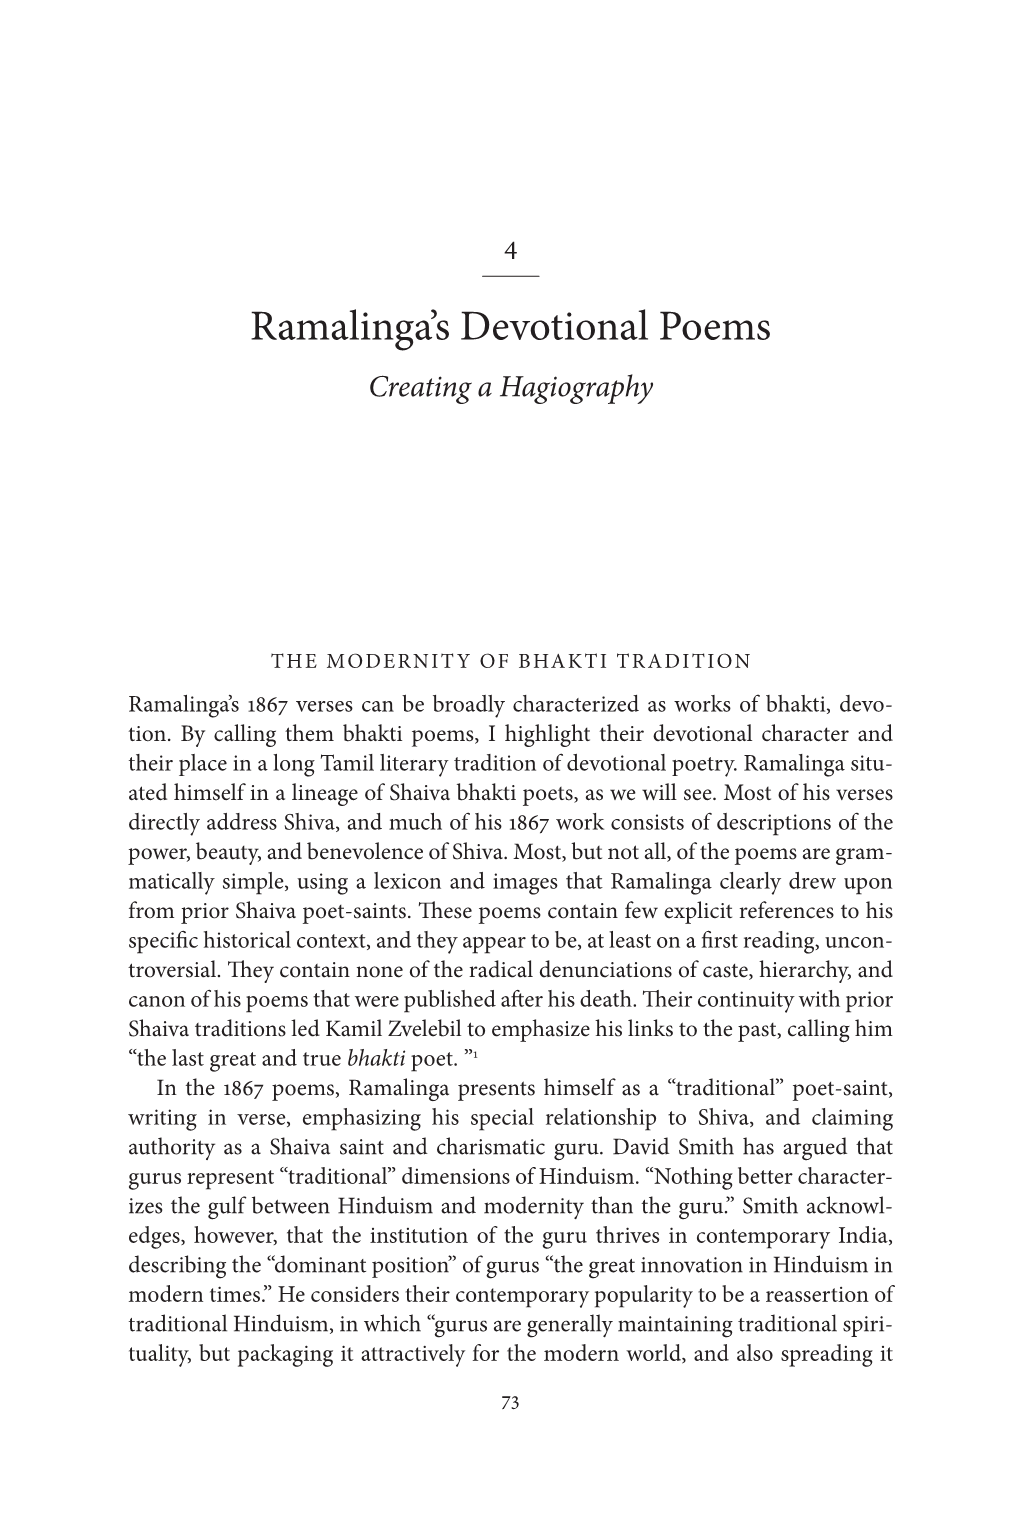 Ramalinga's Devotional Poems